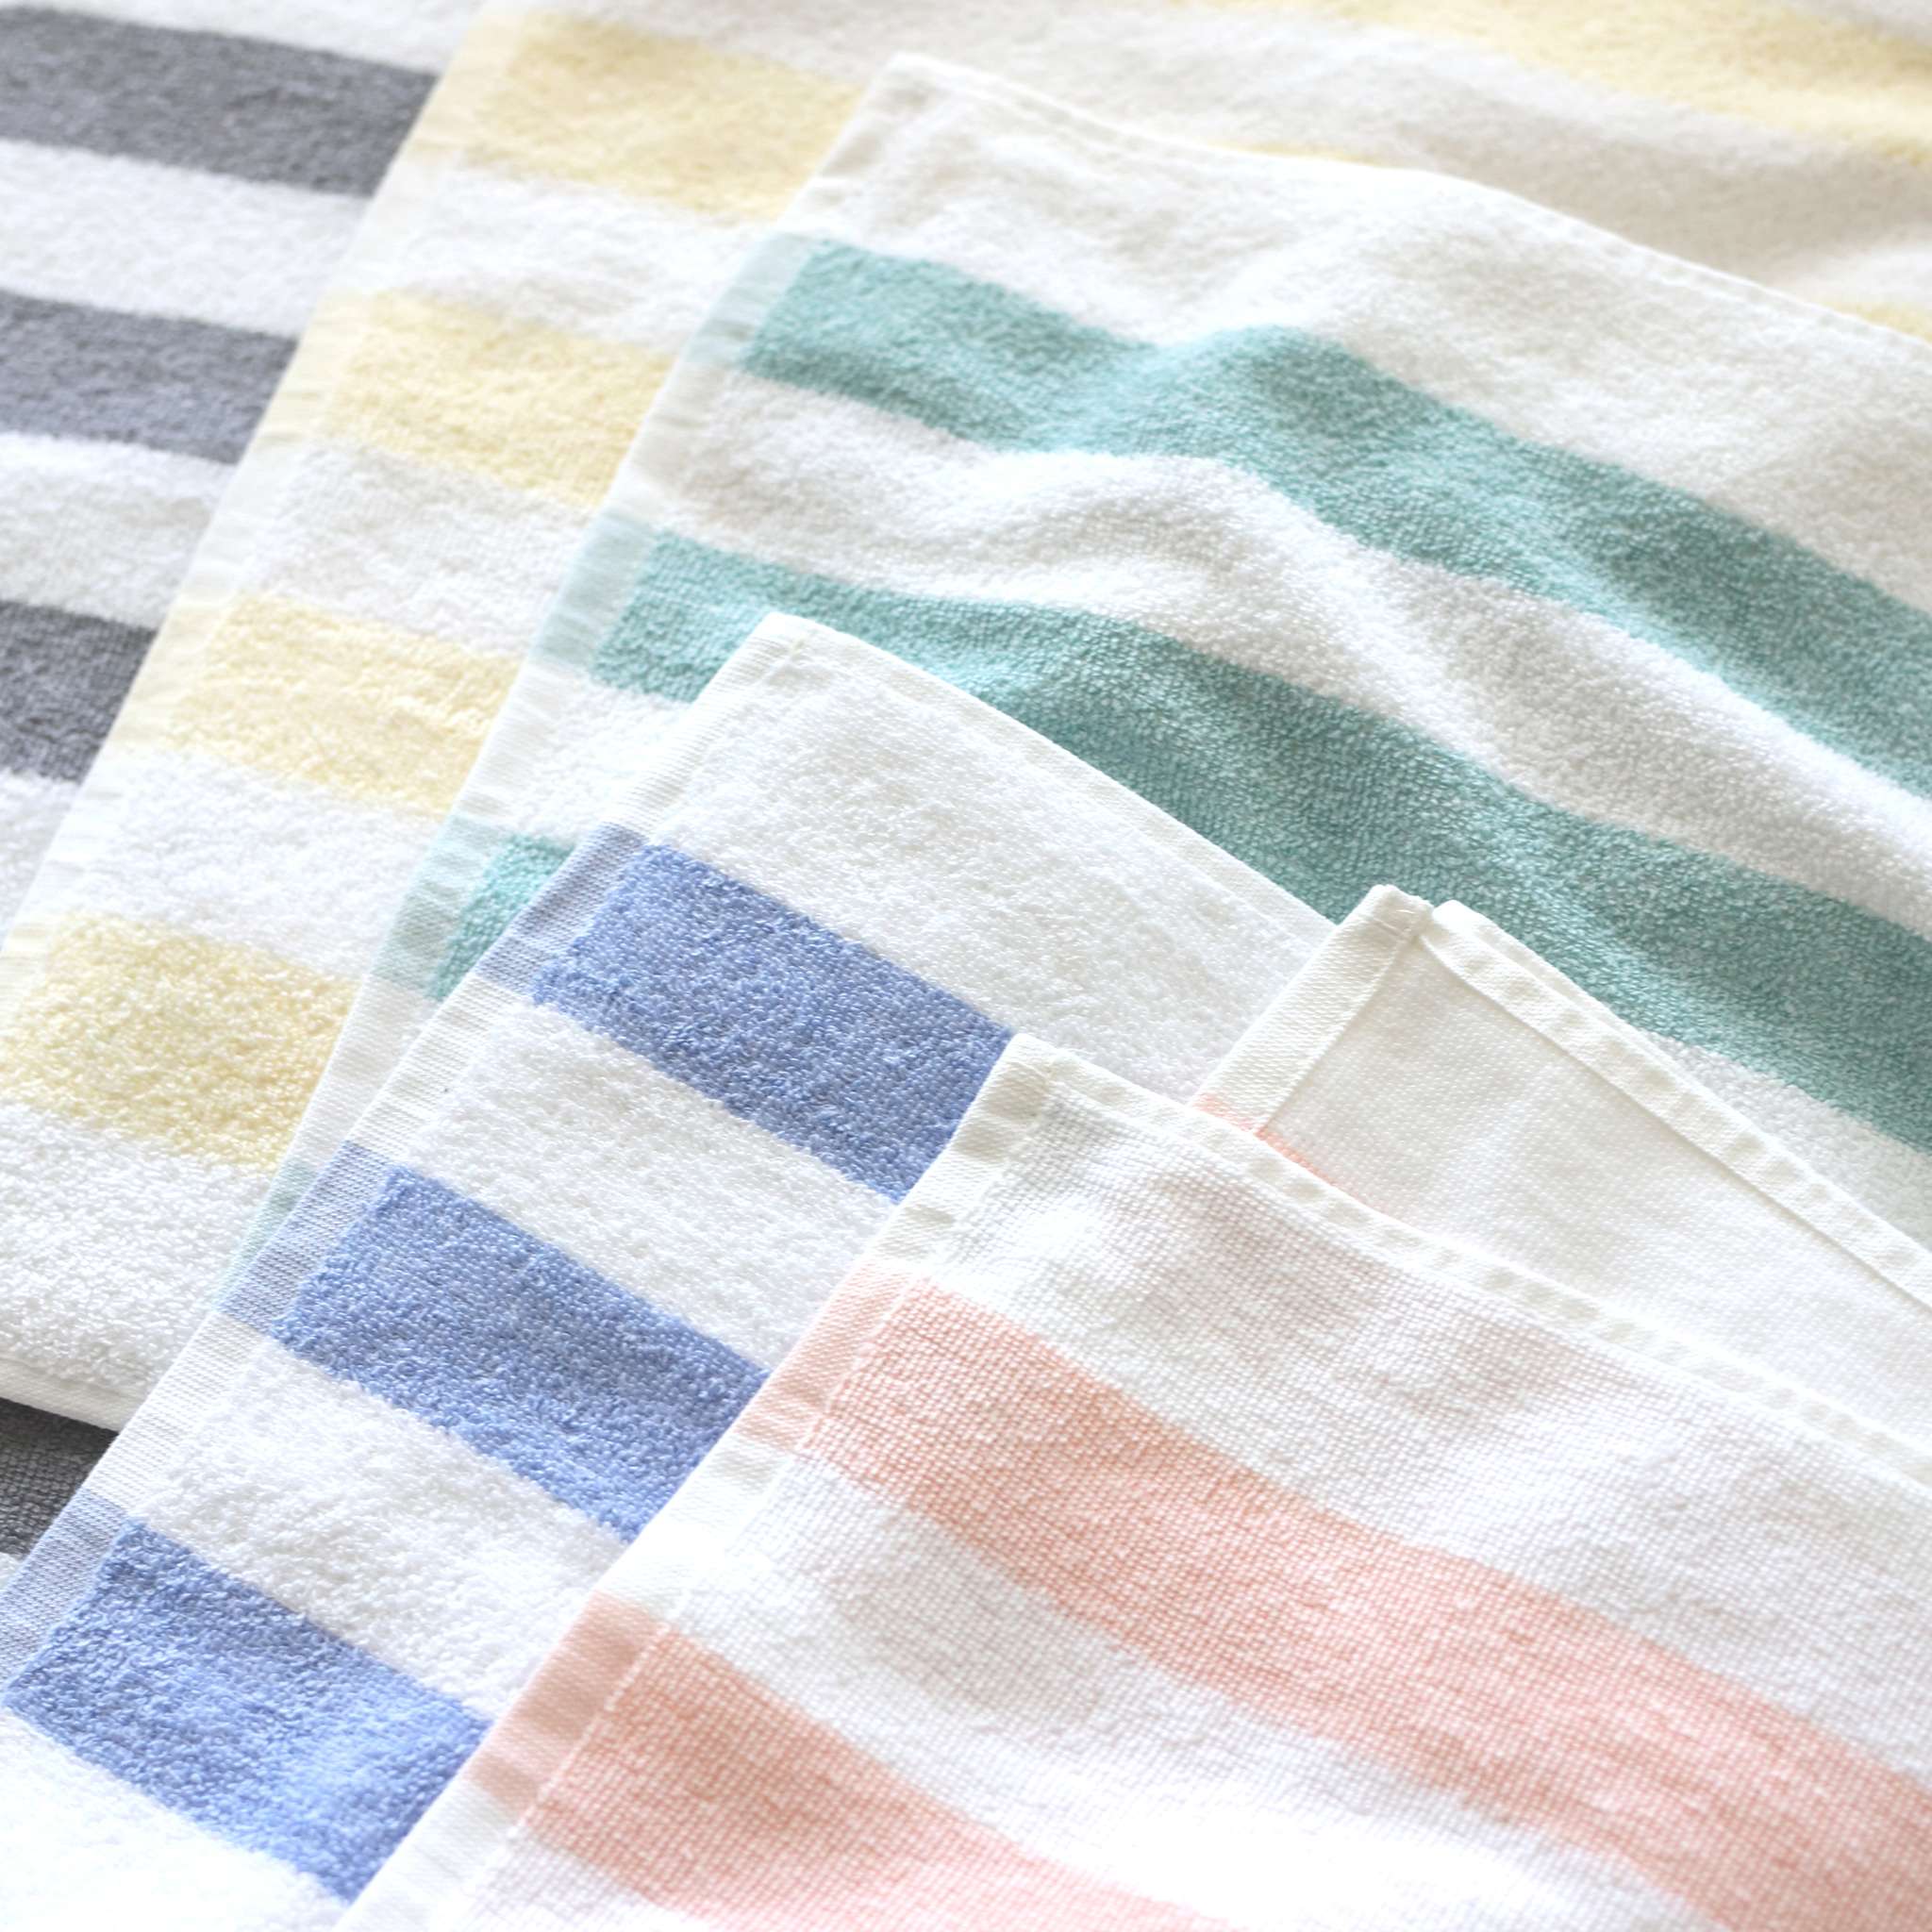 Morihata International Japanese Kitchen Towels in Striped Linen, 3